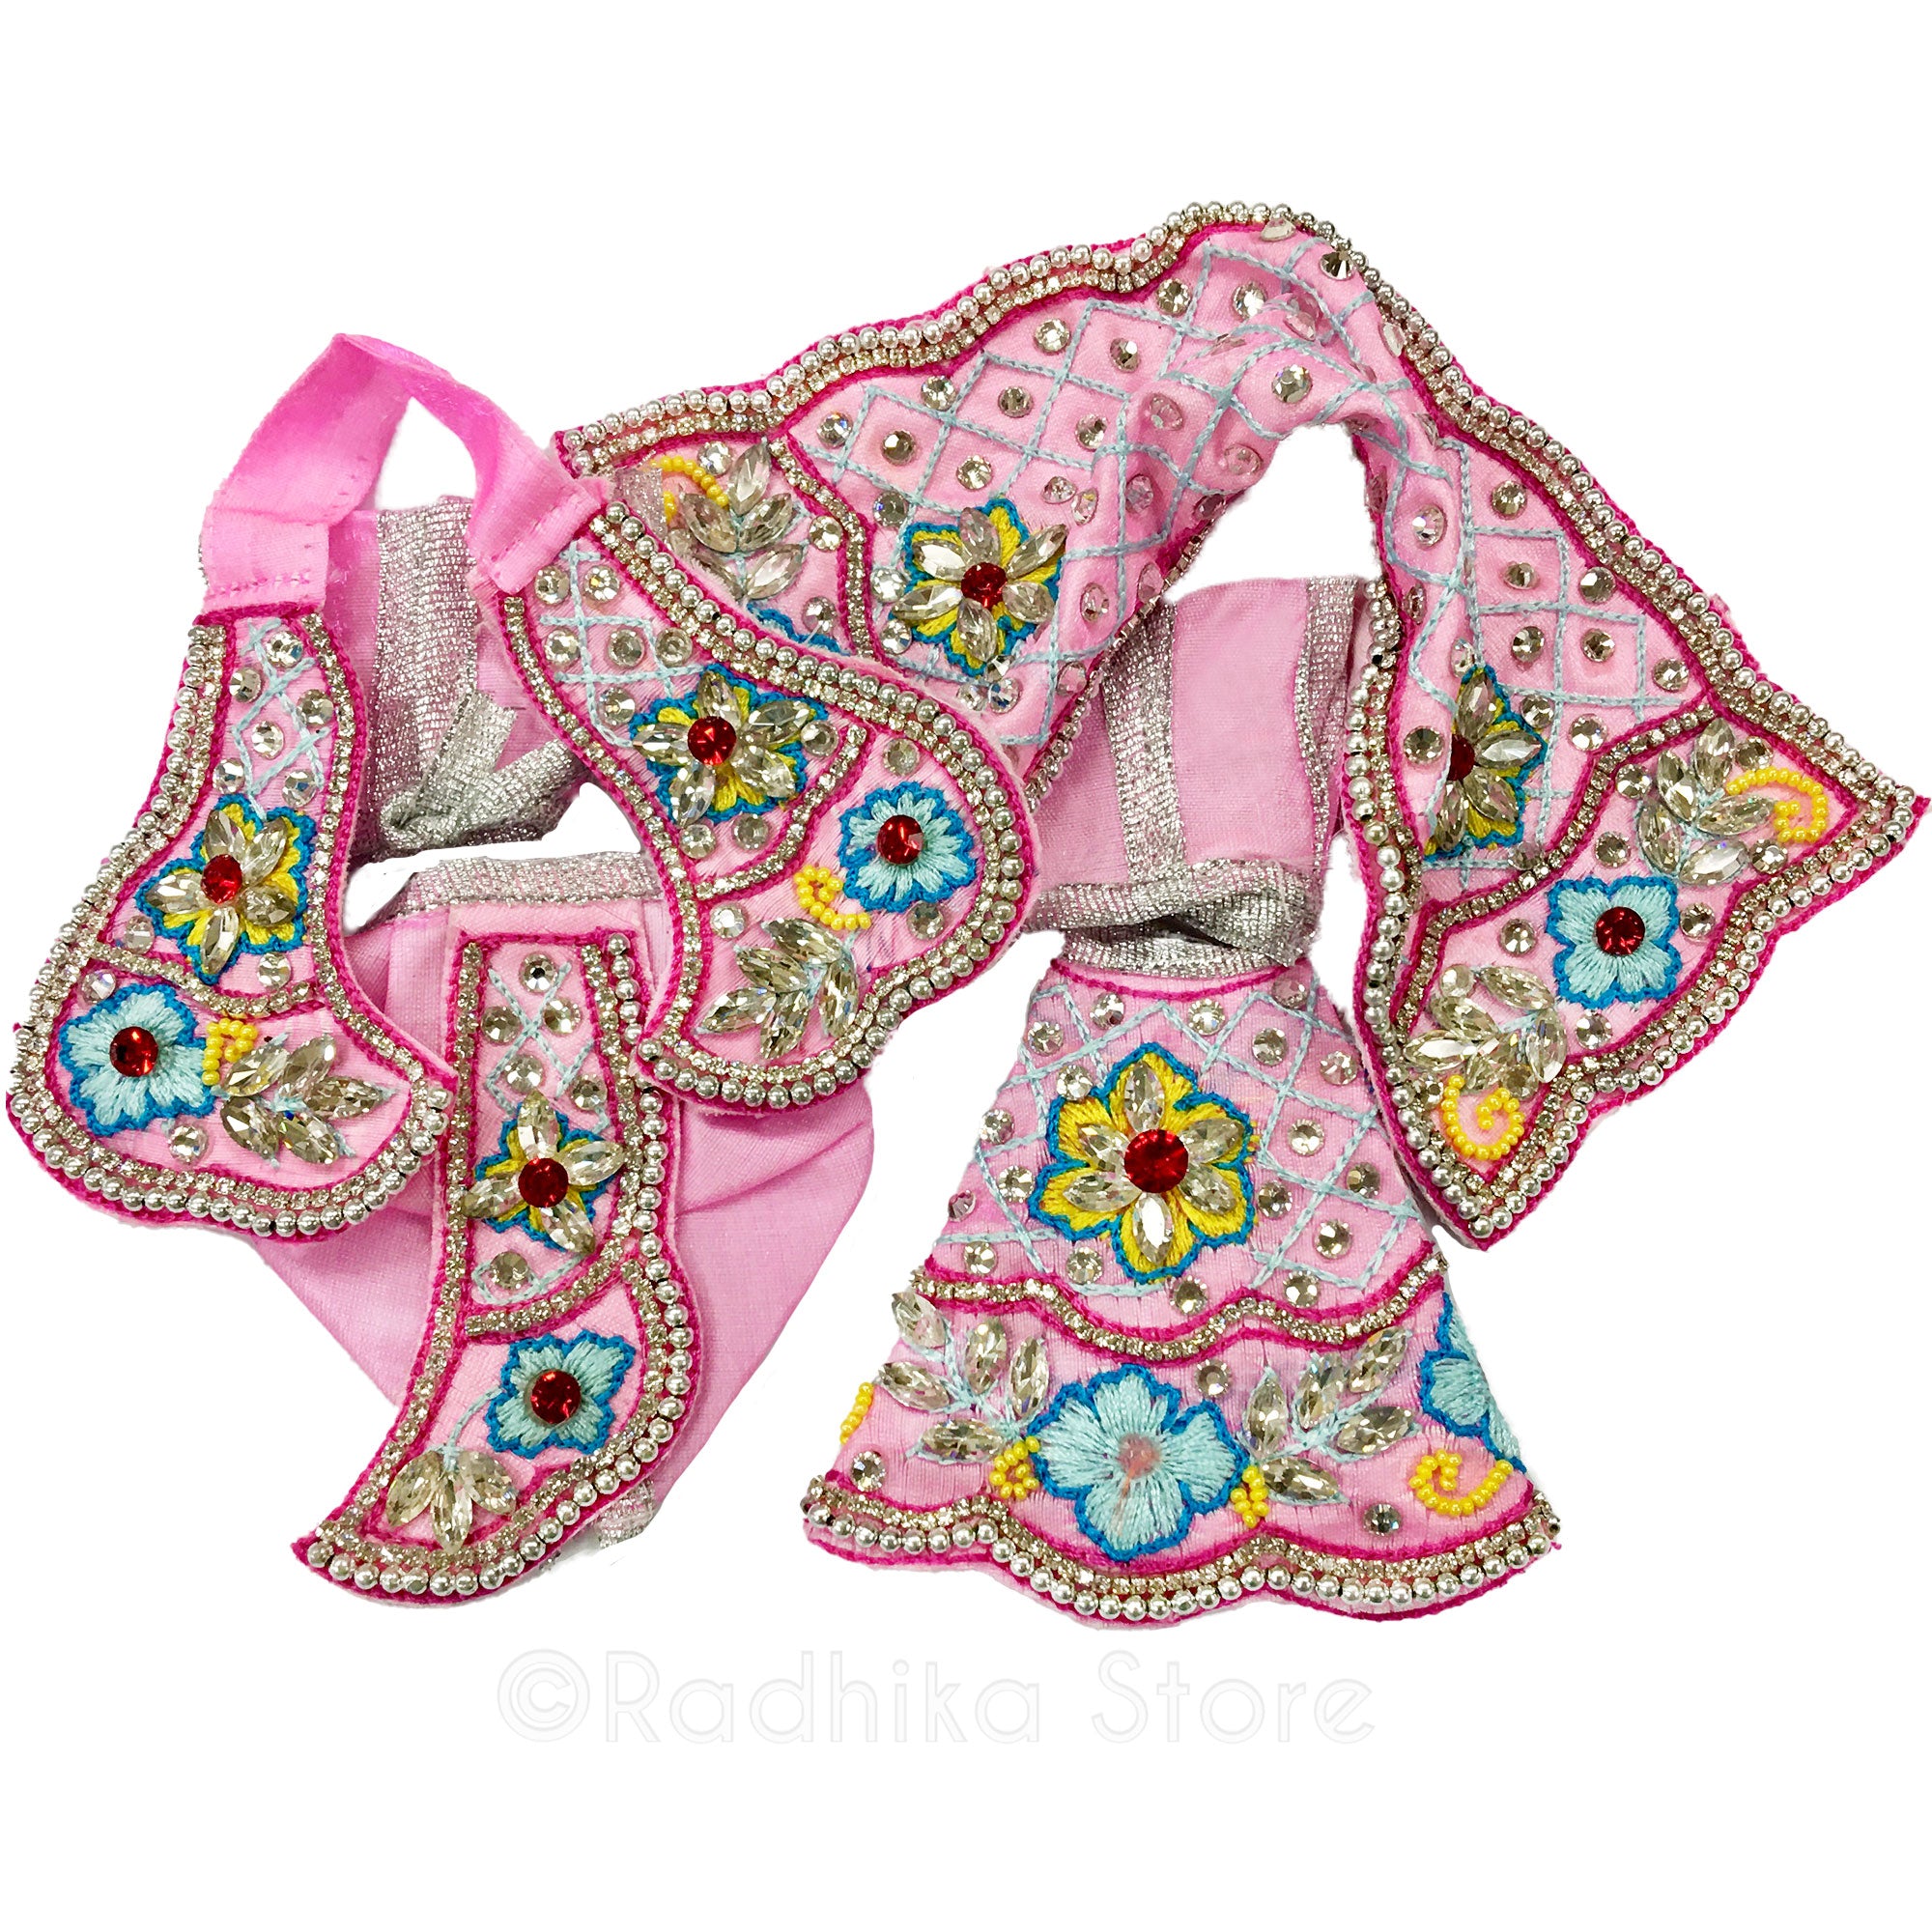 Pretty In Pink - Light Pink Satin - Radha Krishna Deity Outfit